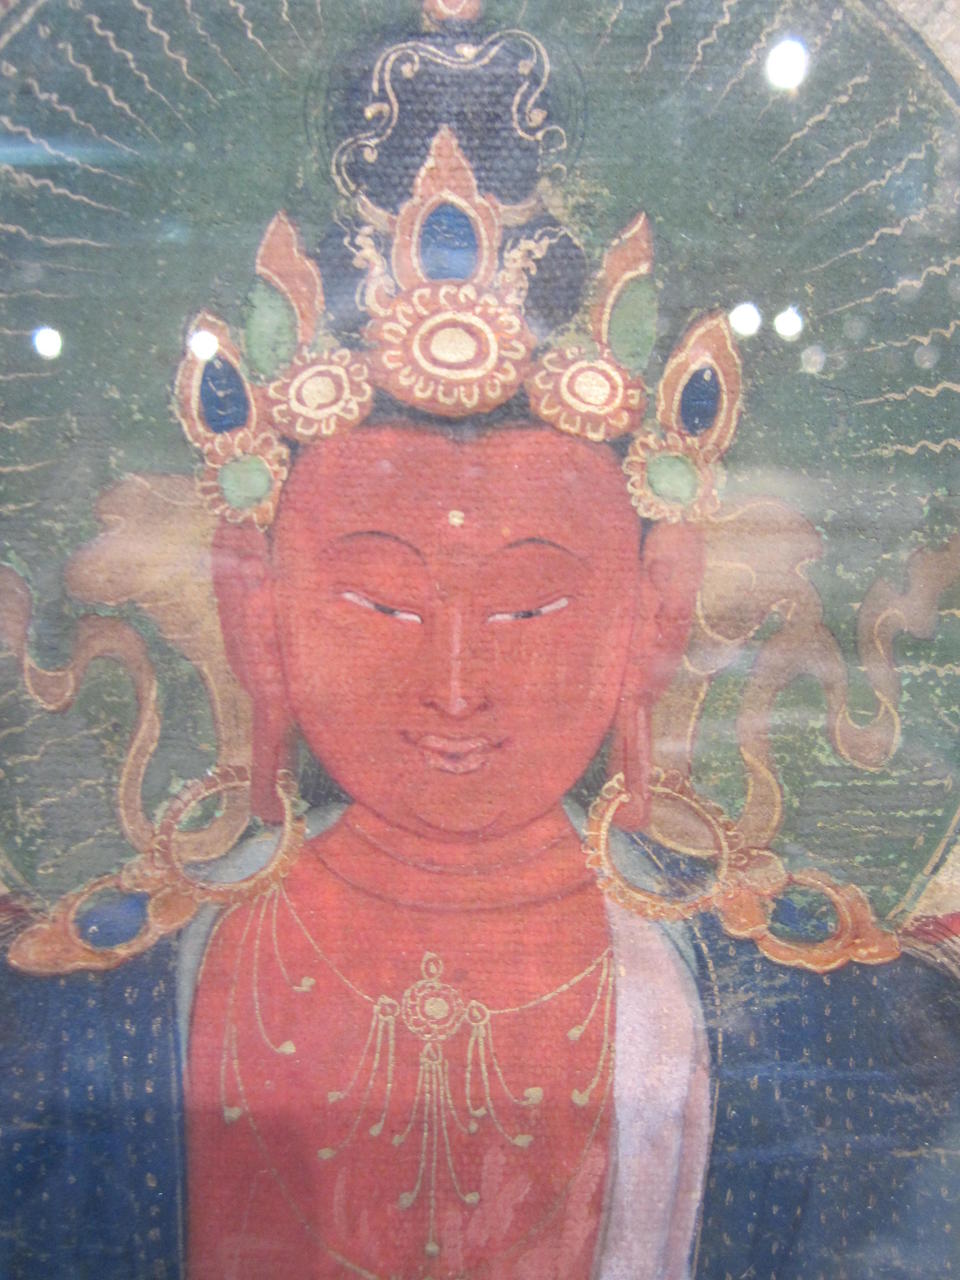 A thangka of Amitayus Tibet, 19th century